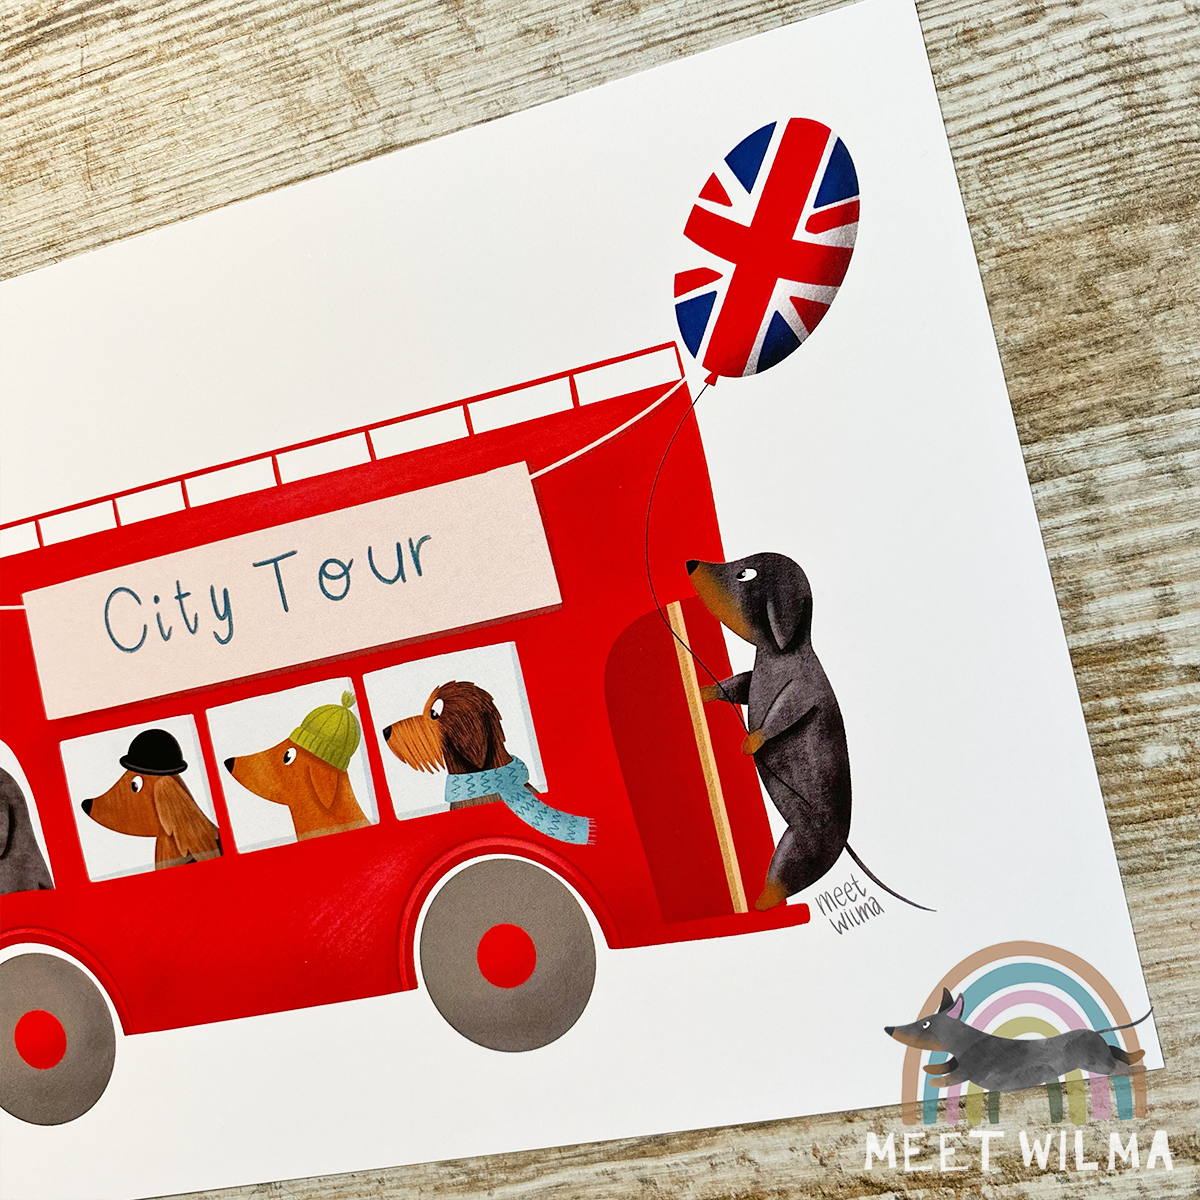 Print "City Tour"